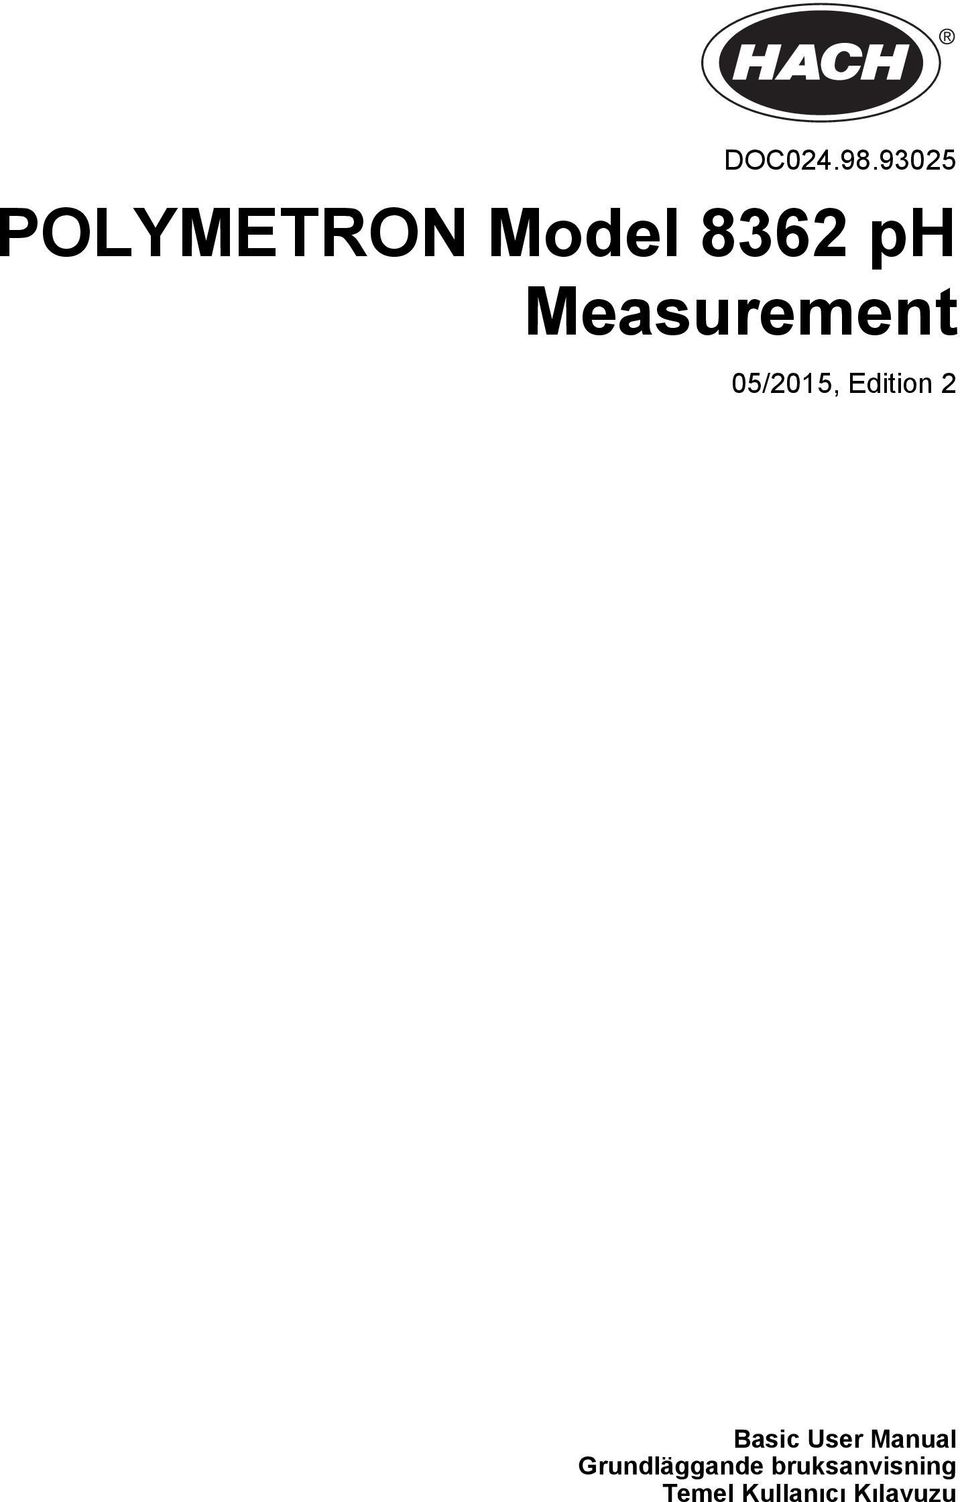 Measurement 05/2015, Edition 2